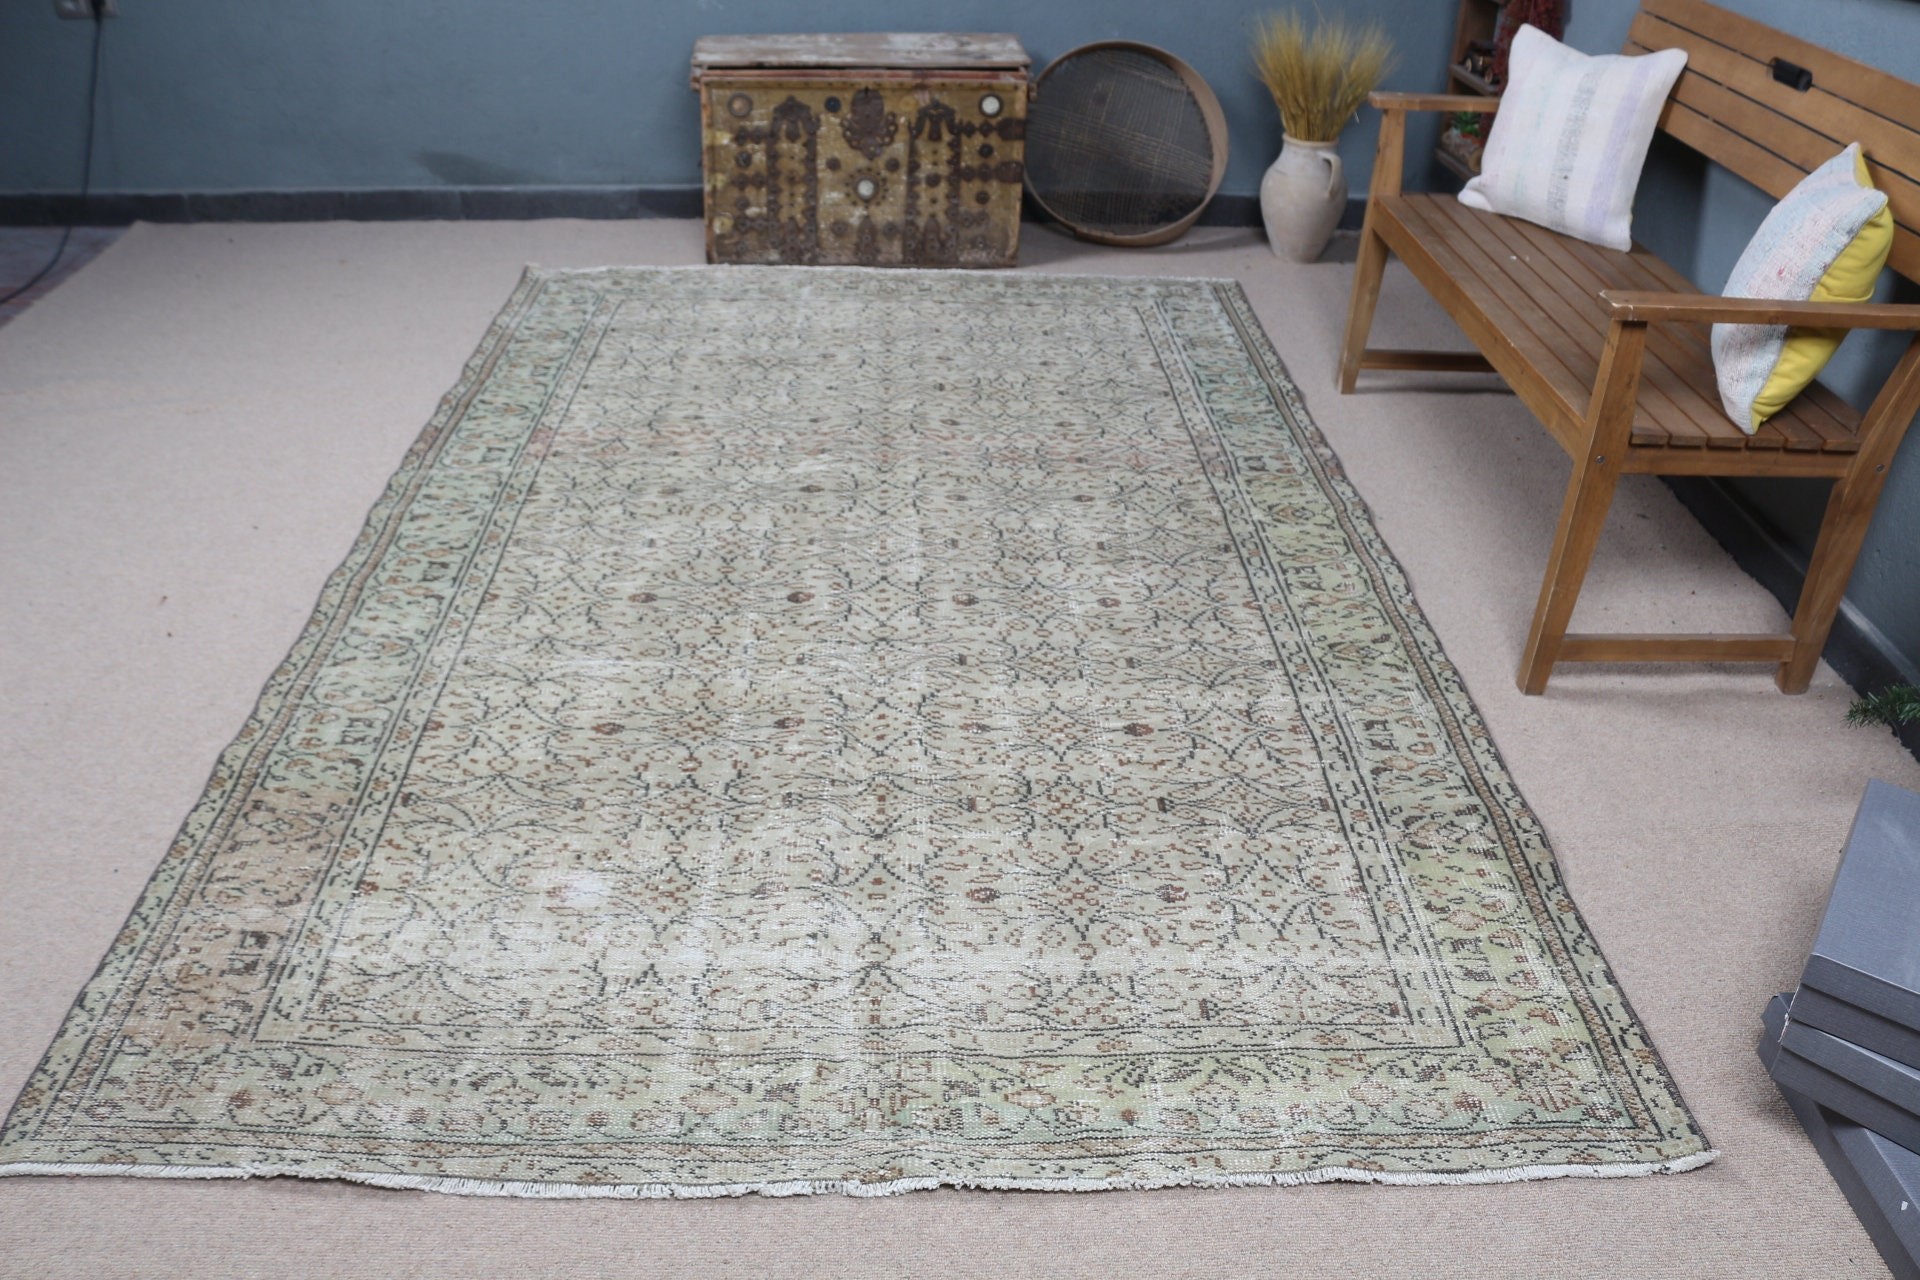 Vintage Rugs, Living Room Rug, Turkish Rug, Moroccan Rug, Salon Rugs, Handwoven Rug, Beige Anatolian Rug, 6x9.4 ft Large Rugs